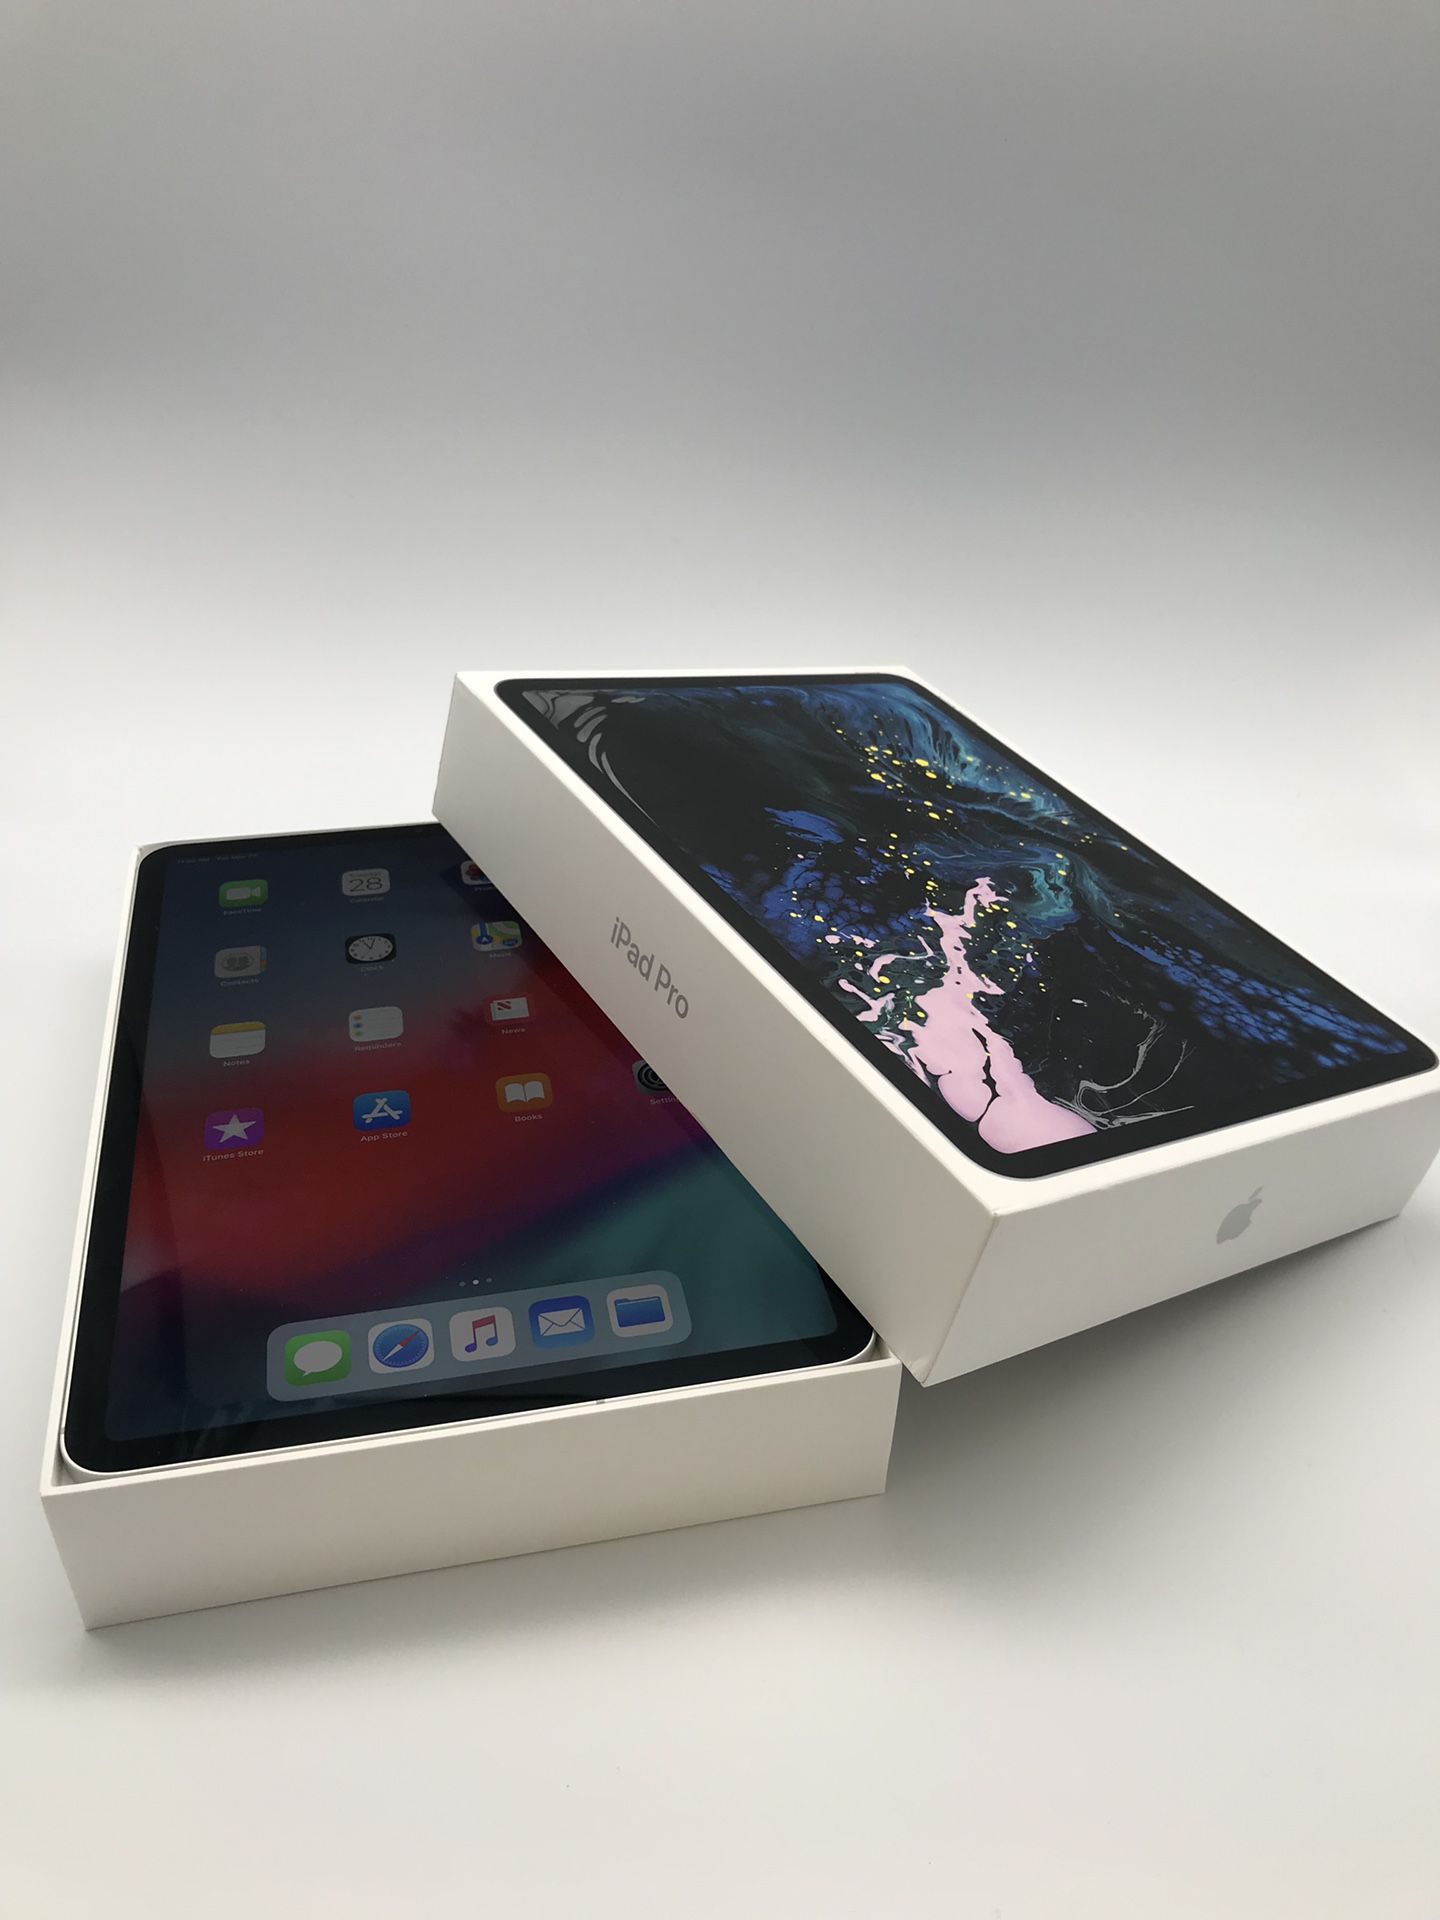 I am buying Apple iPad Pro 3rd Generation